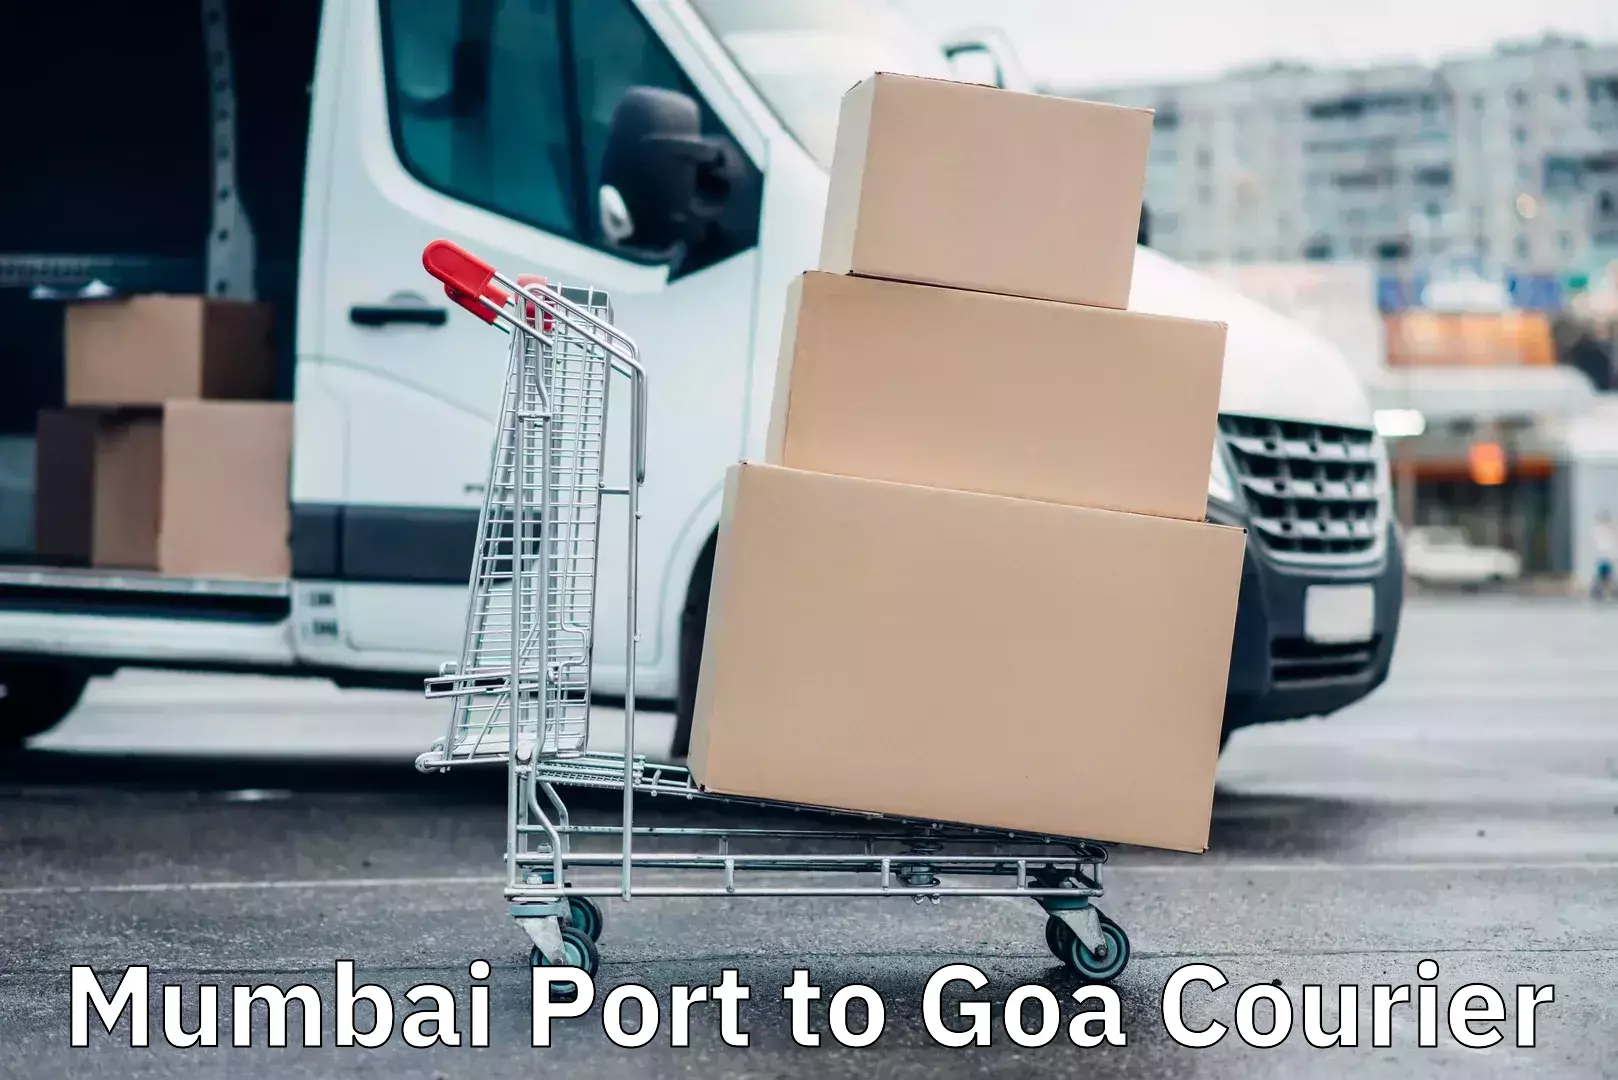 Efficient parcel tracking Mumbai Port to Goa